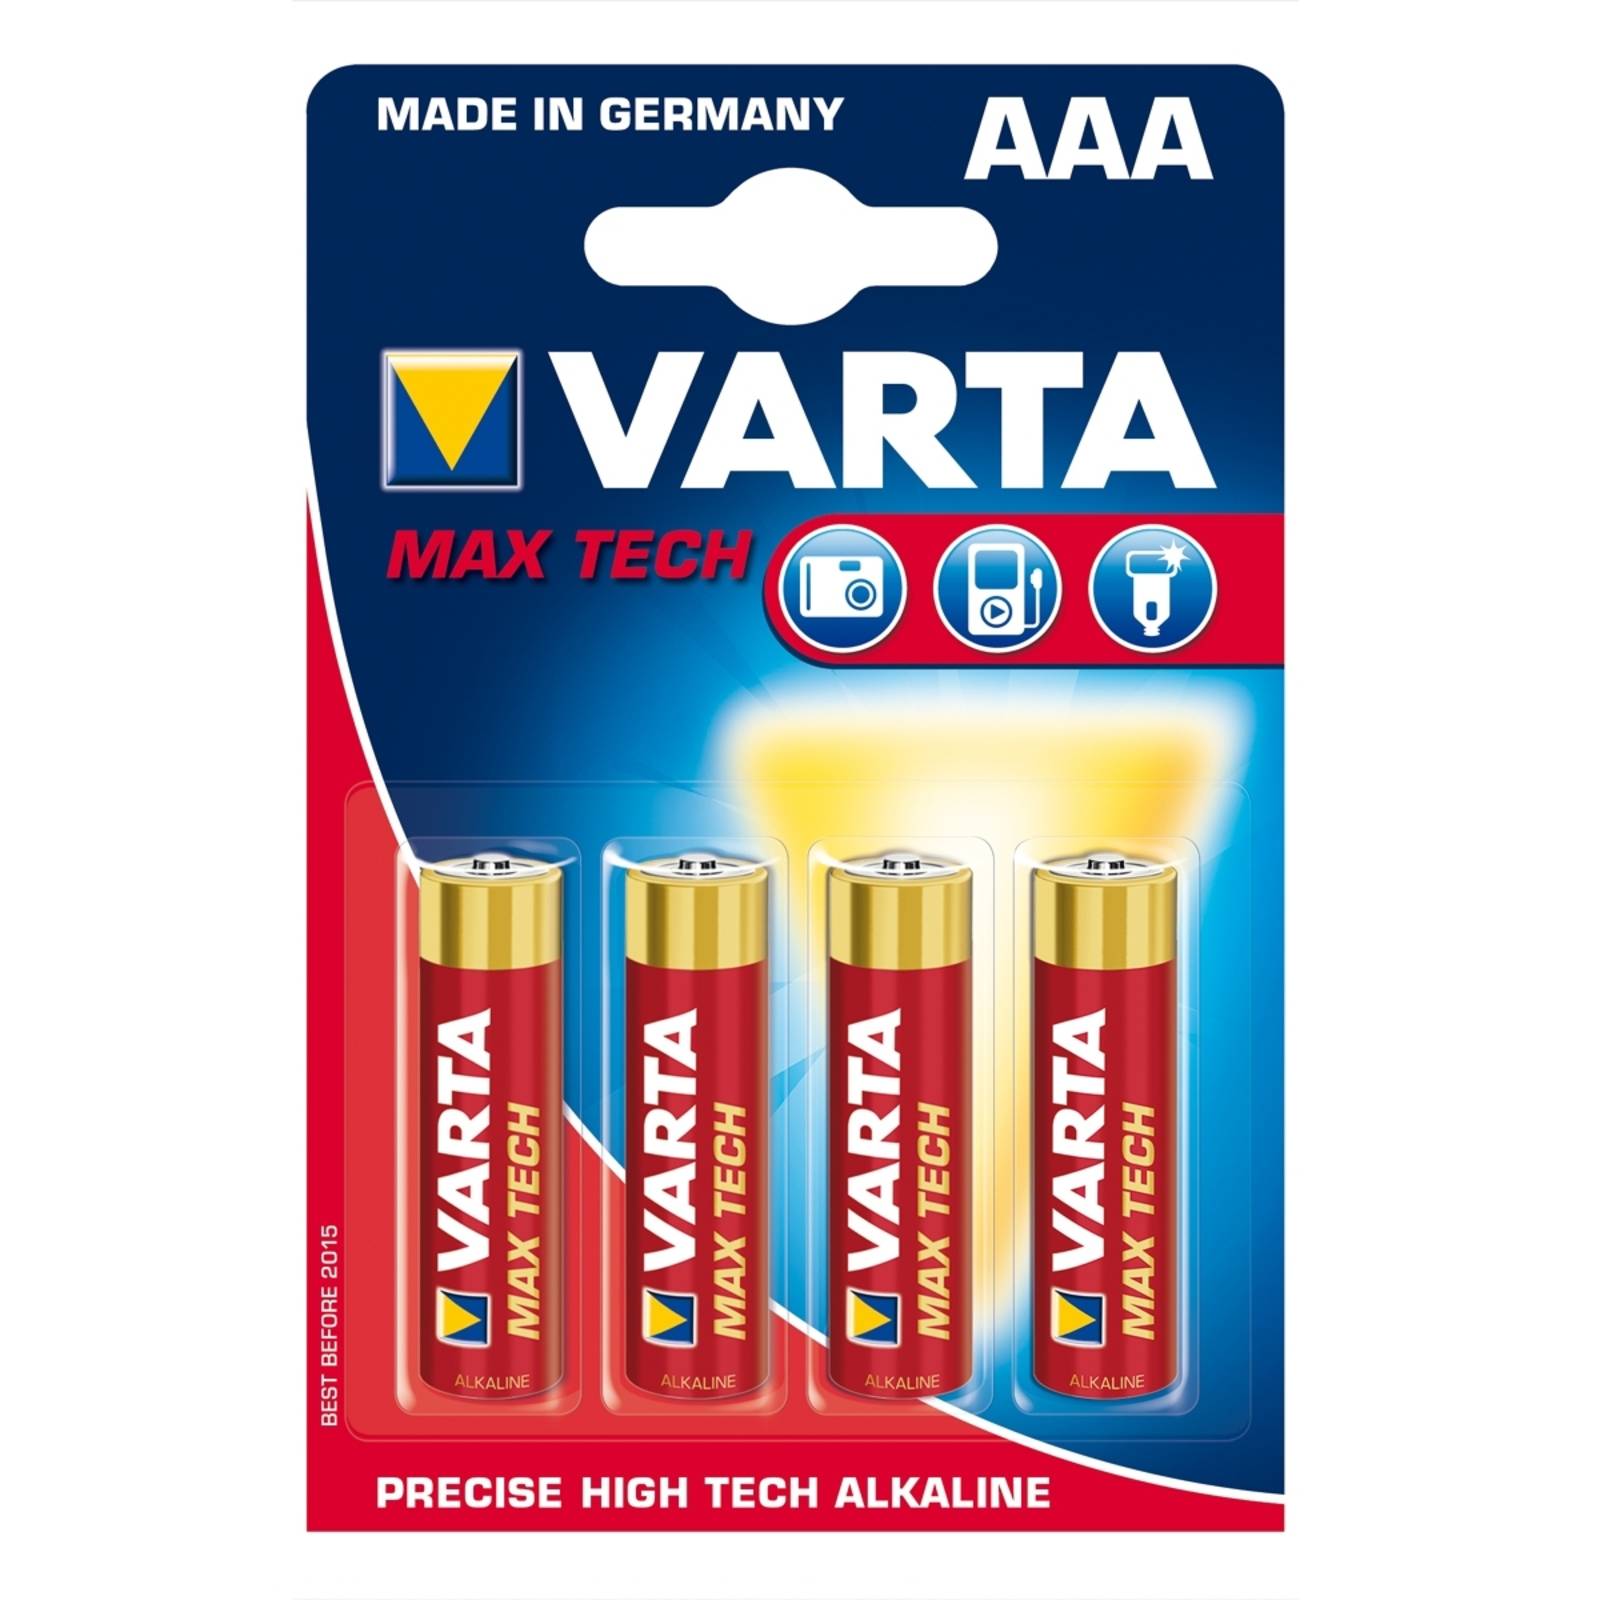 Varta Max Tech Batterien AAA Micro 4703 in 4-er Blister